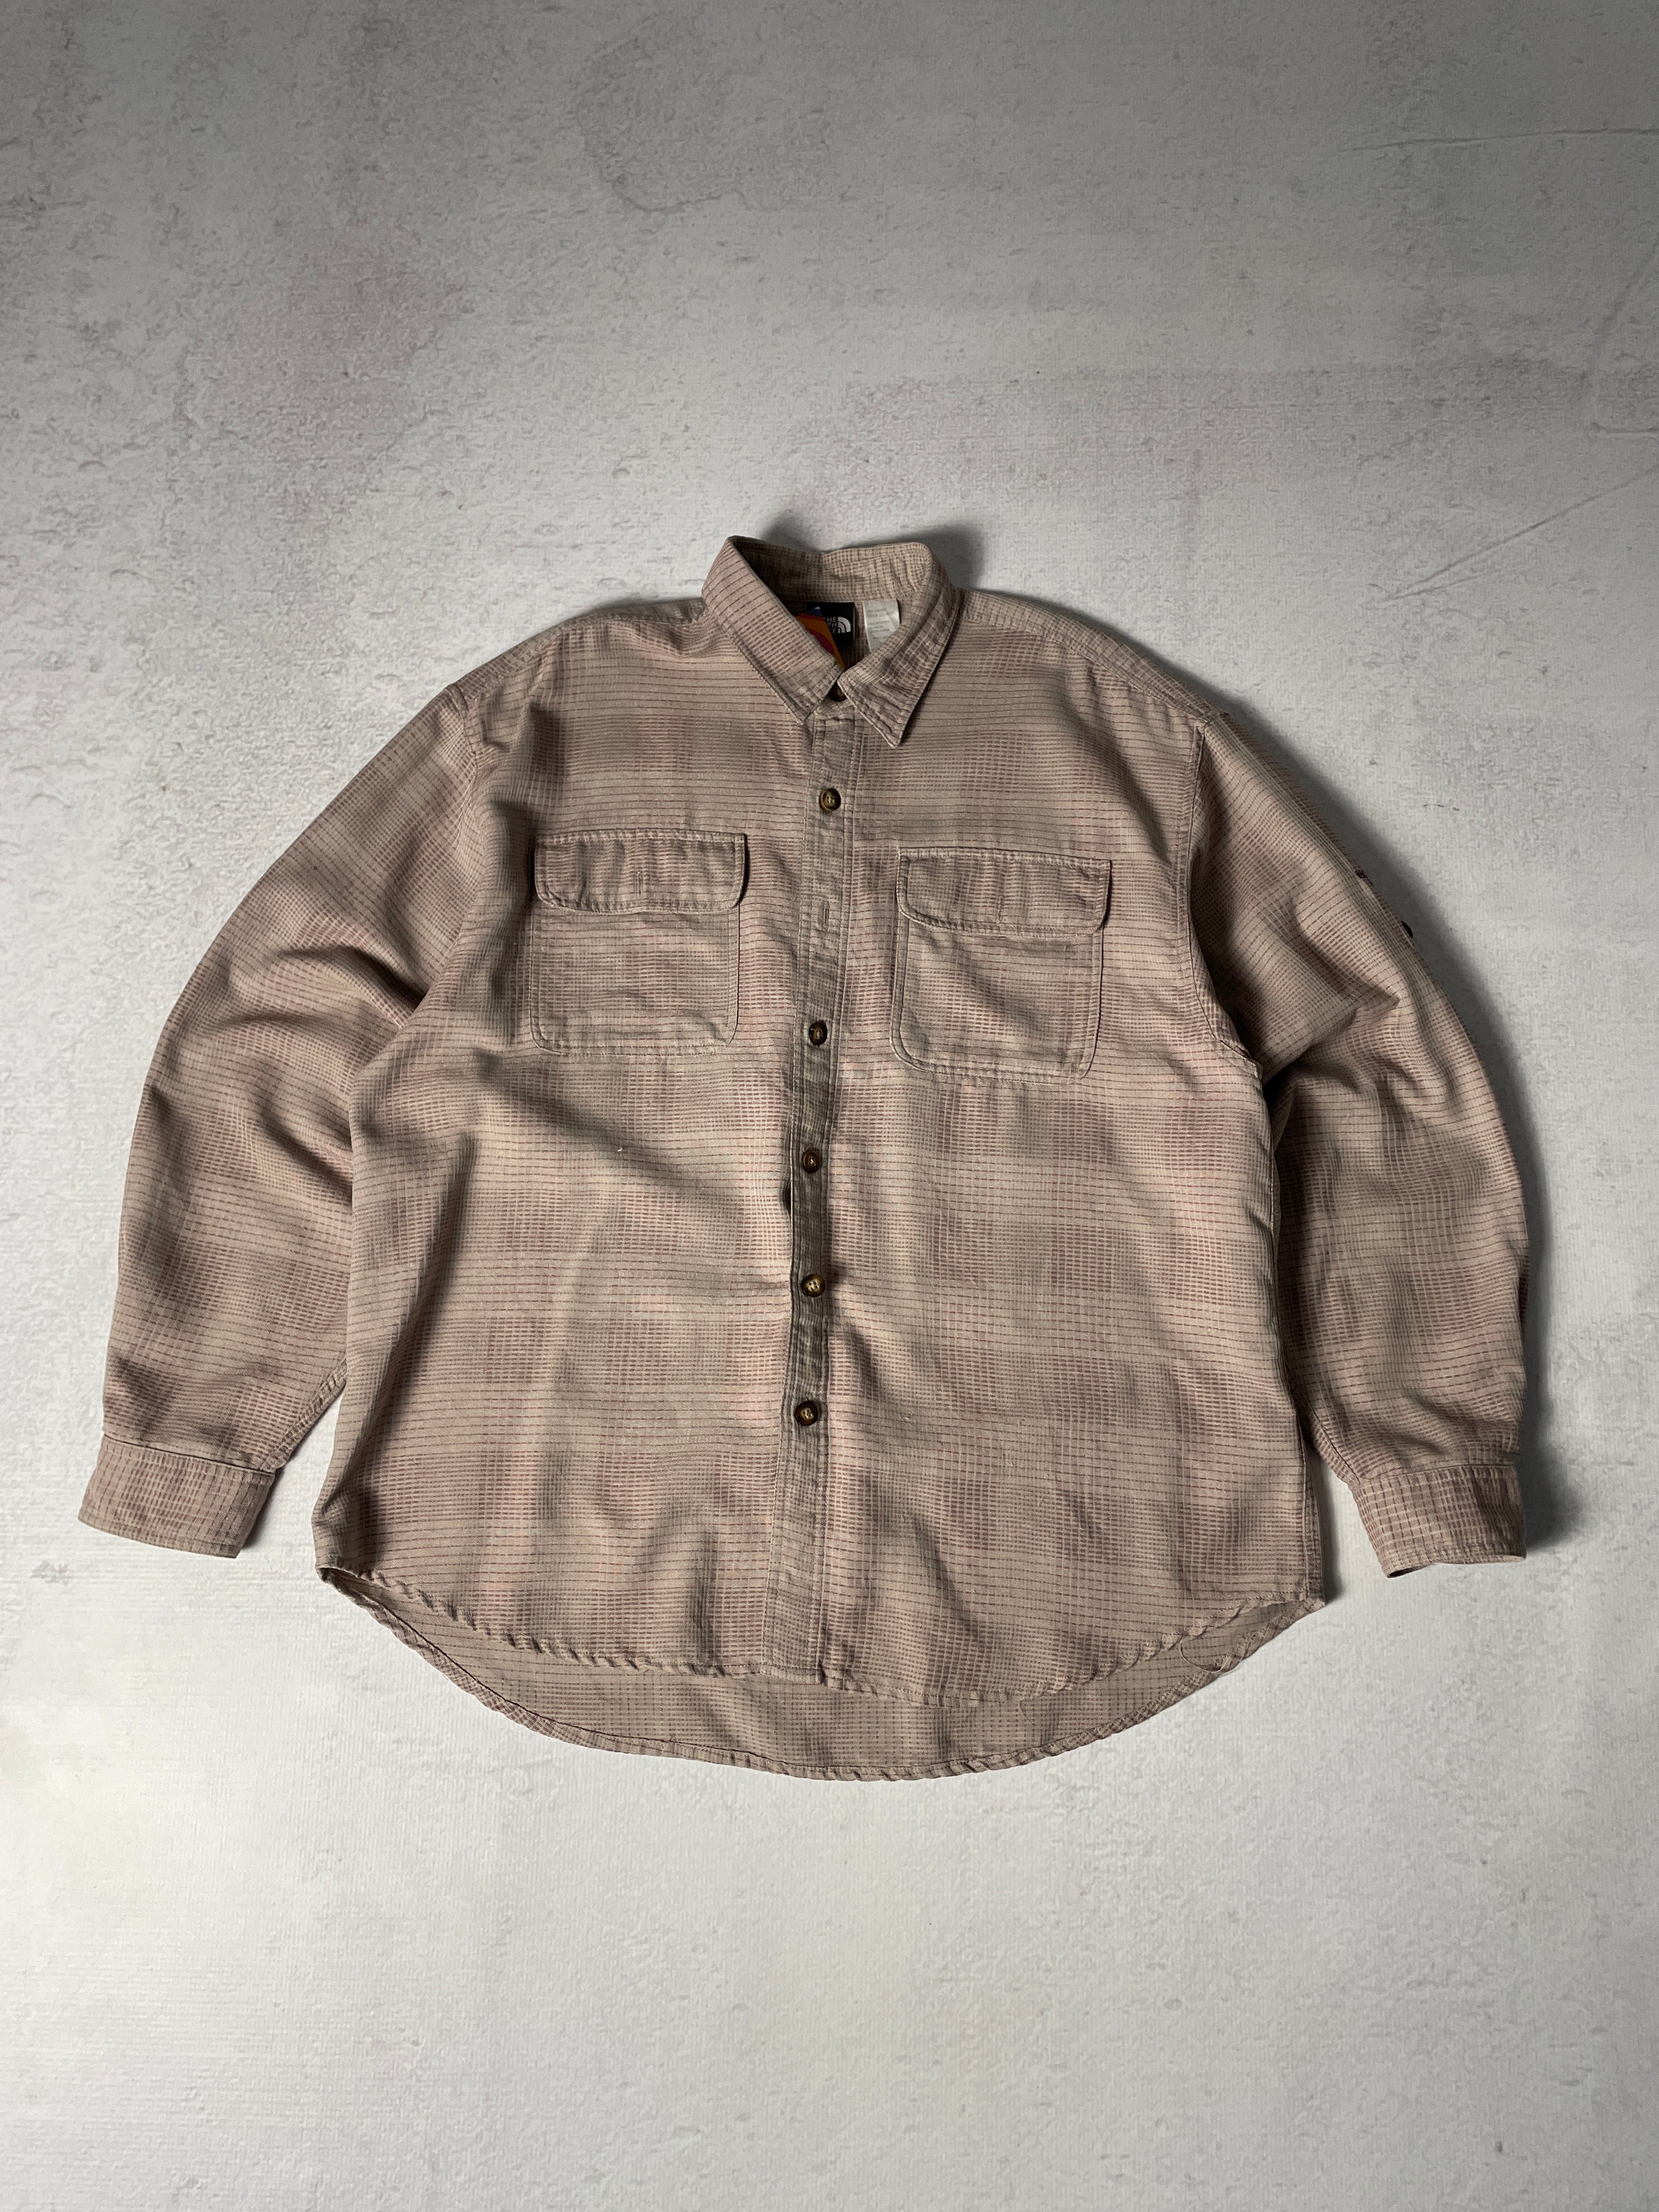 Vintage The North Face Buttoned Shirt - Men's XL